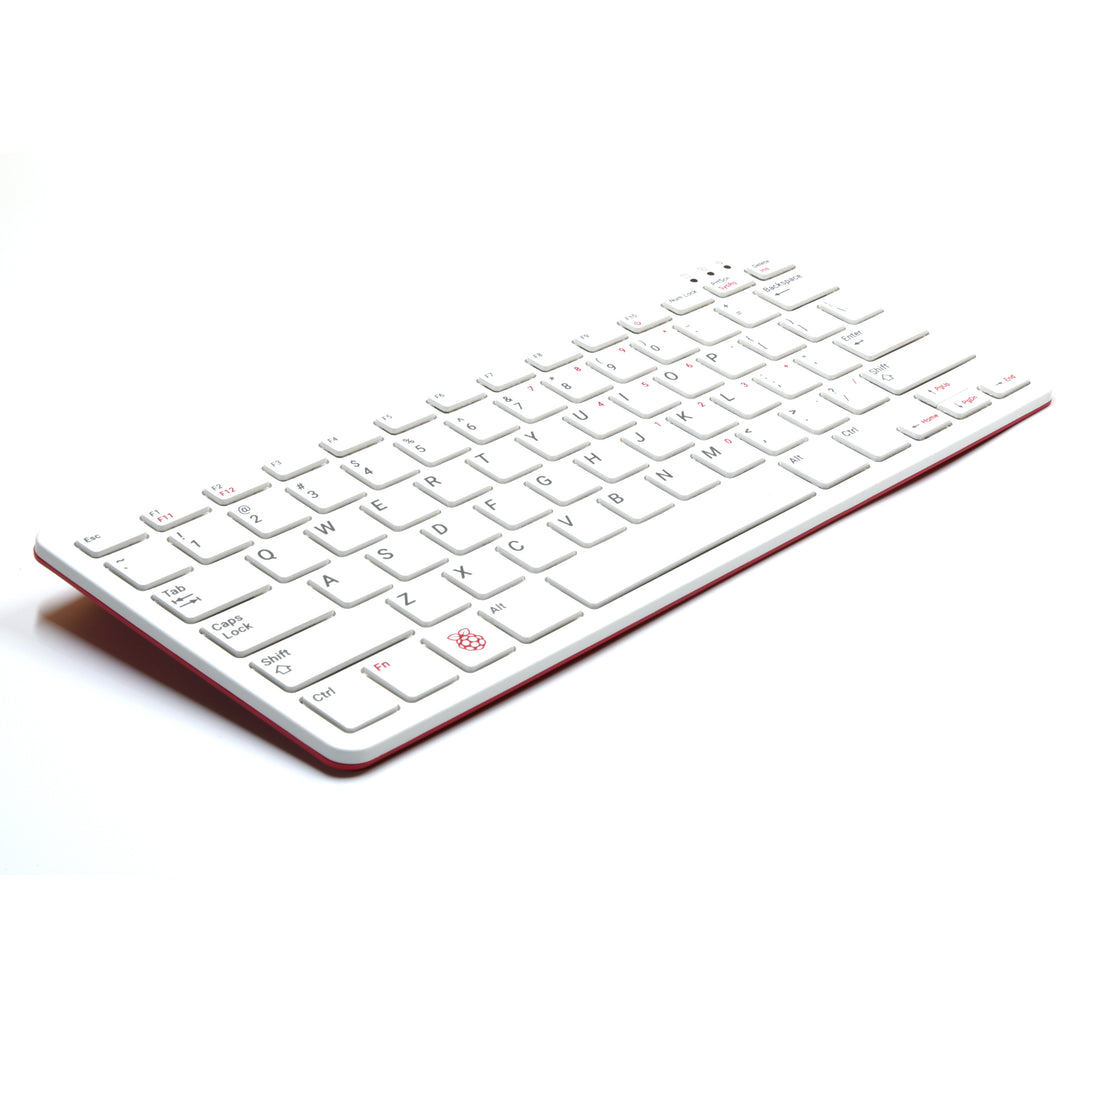 PepperTech Digital Raspberry Pi 400 Desktop Computer Complete Value Pack – 32GB Ubuntu Desktop Edition (U.S. Layout, Red and White)